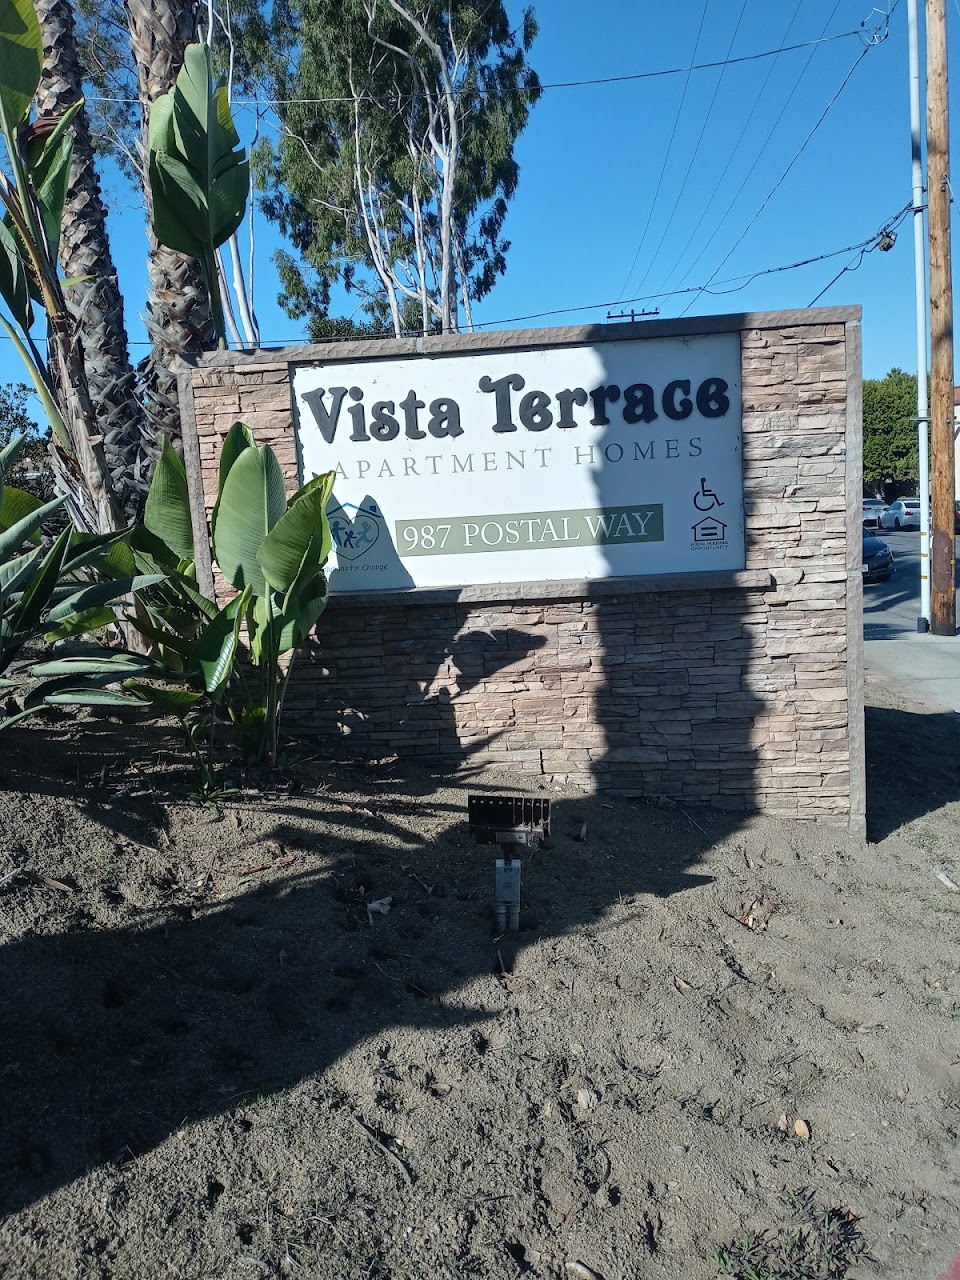 Photo of VISTA TERRACE. Affordable housing located at 987 POSTAL WAY VISTA, CA 92083